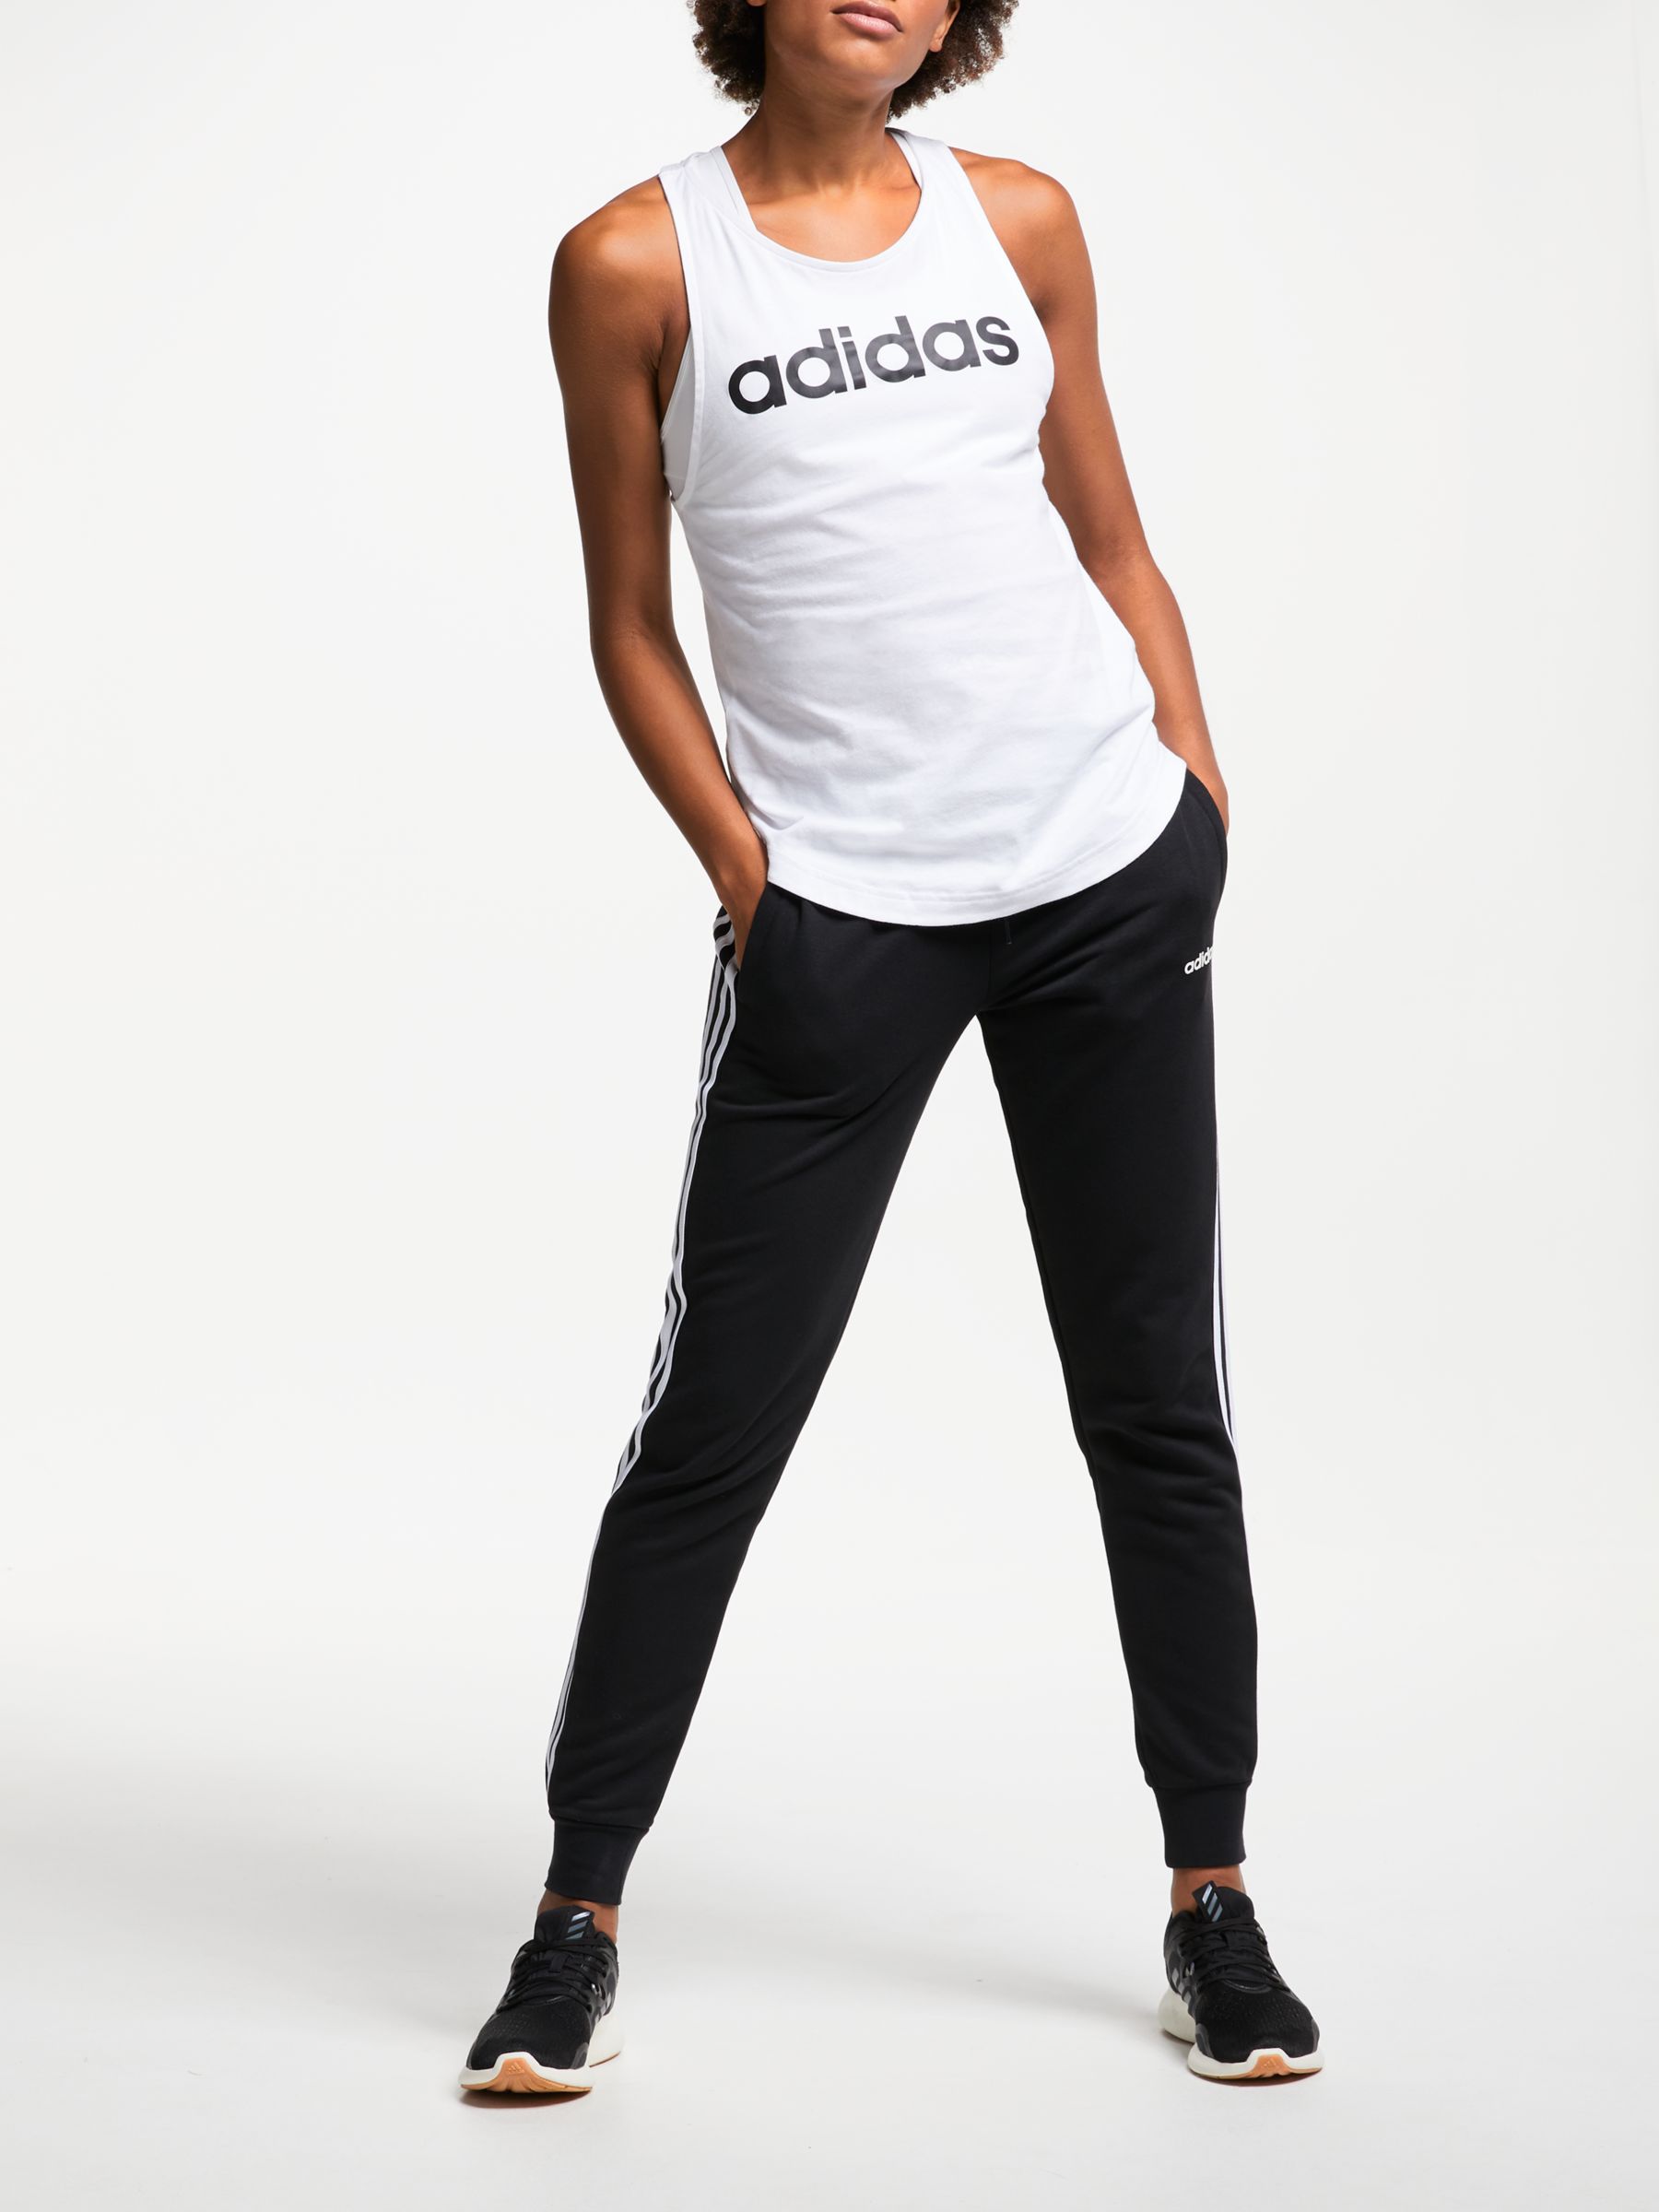 Adidas Essentials 3-Stripes Joggers Women's, Size: XS, Black